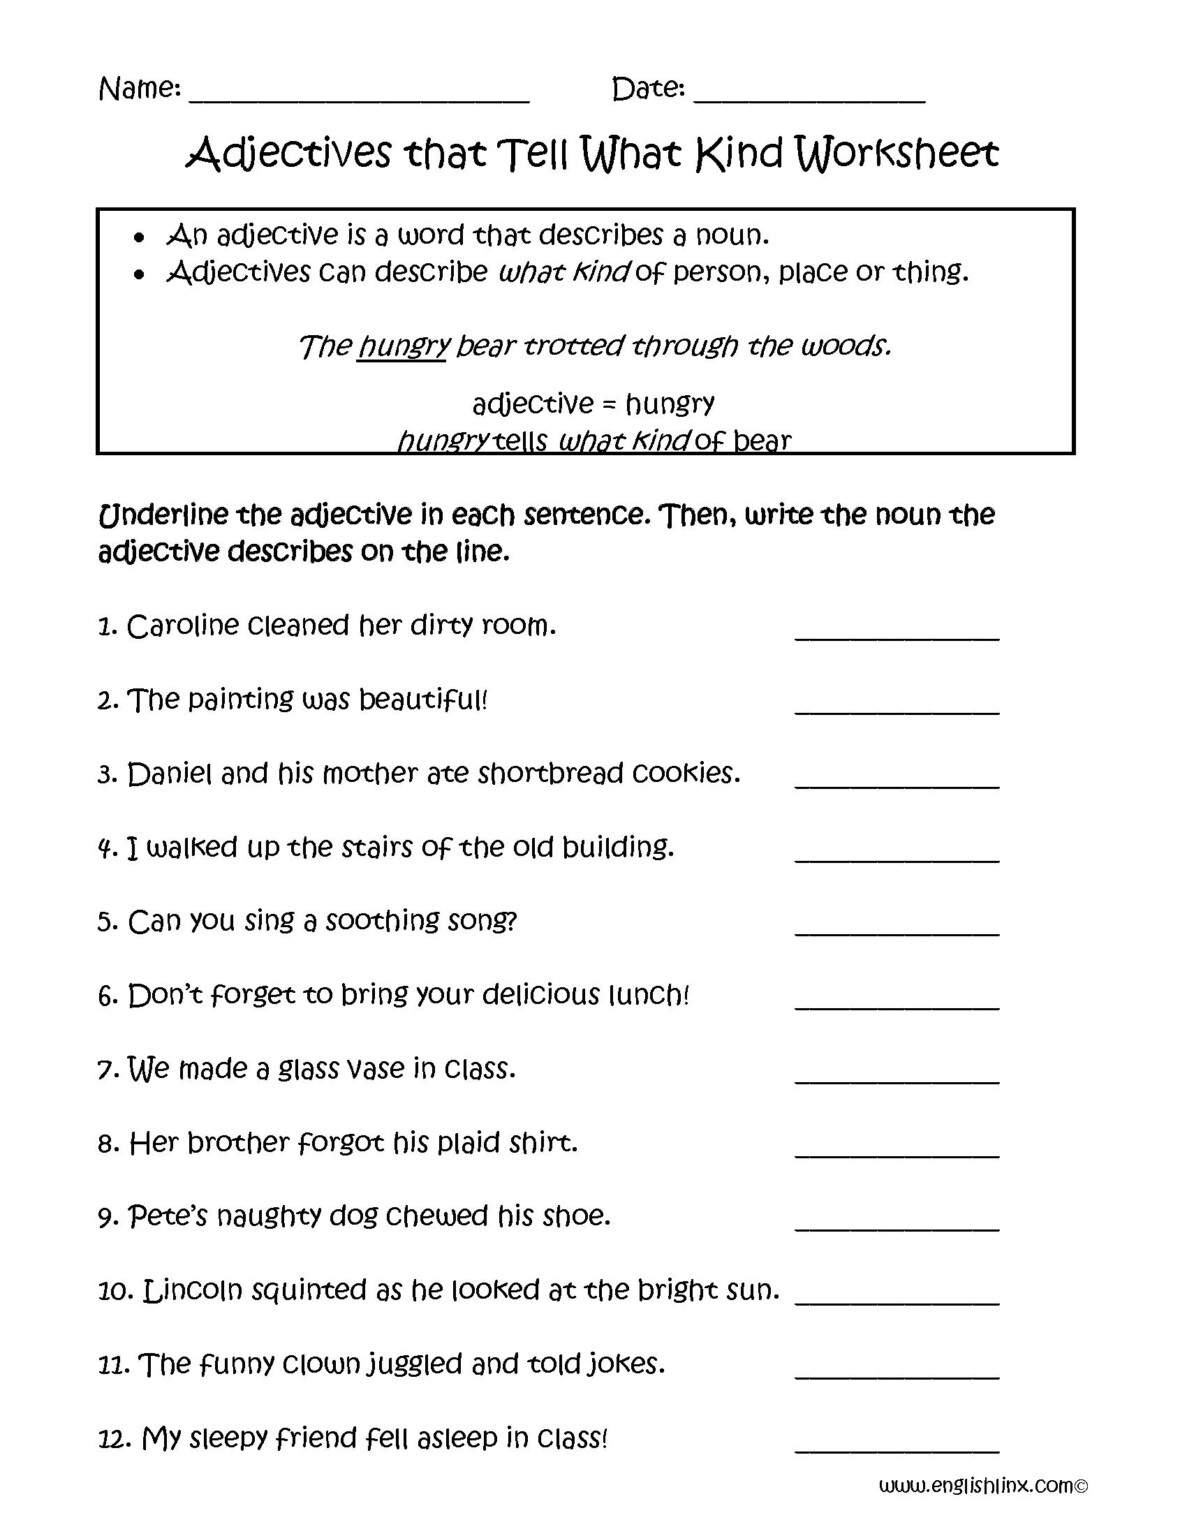 types-of-adjectives-worksheet-pdf-adjectiveworksheets